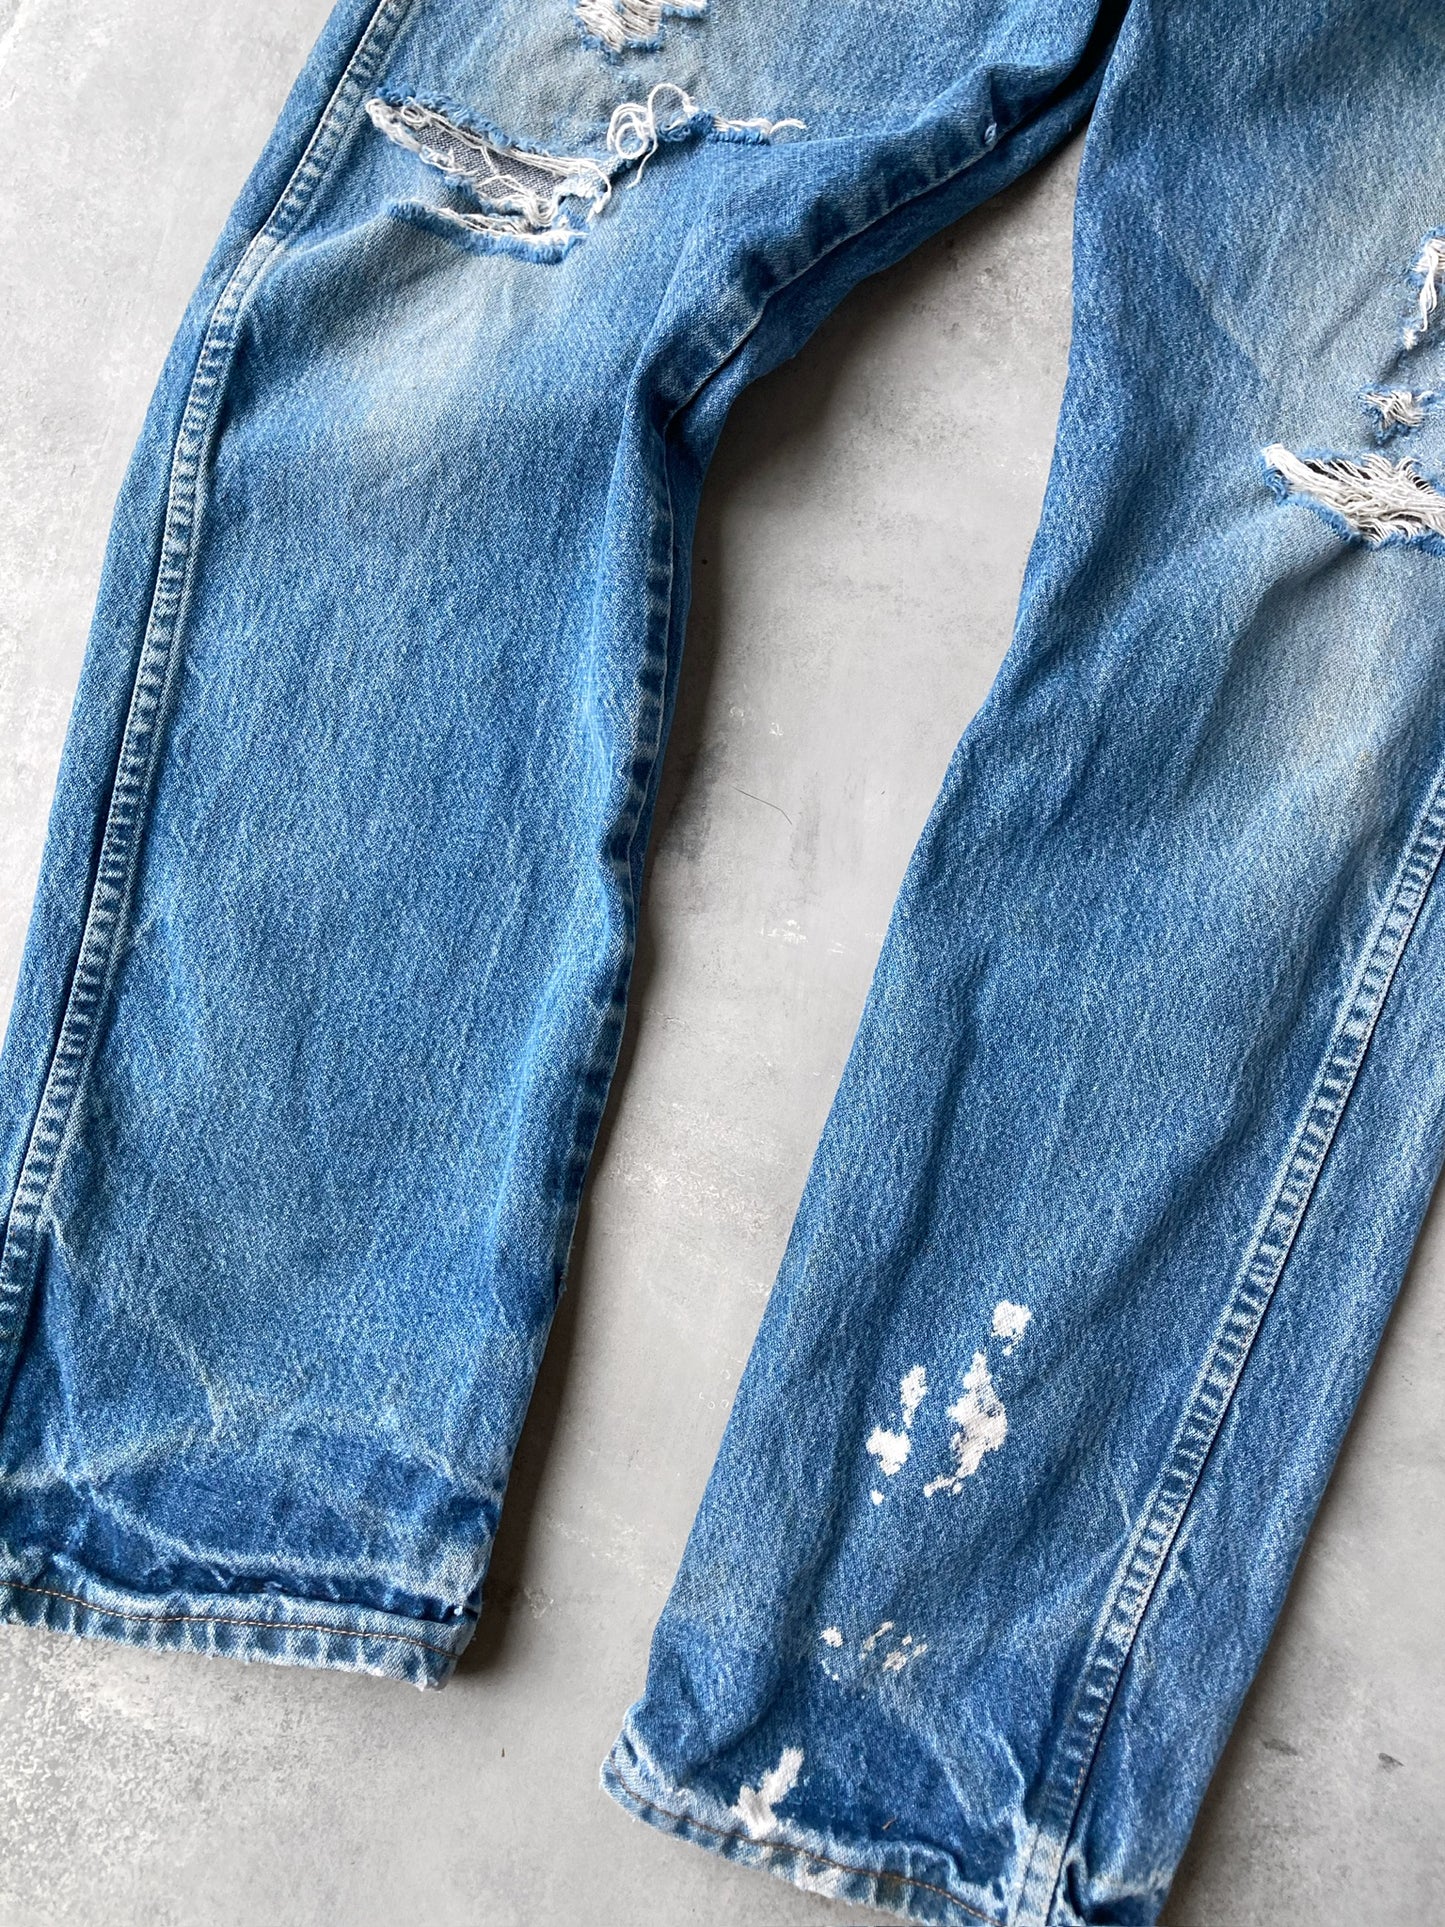 Distressed Wrangler Jeans 00's - 34x31